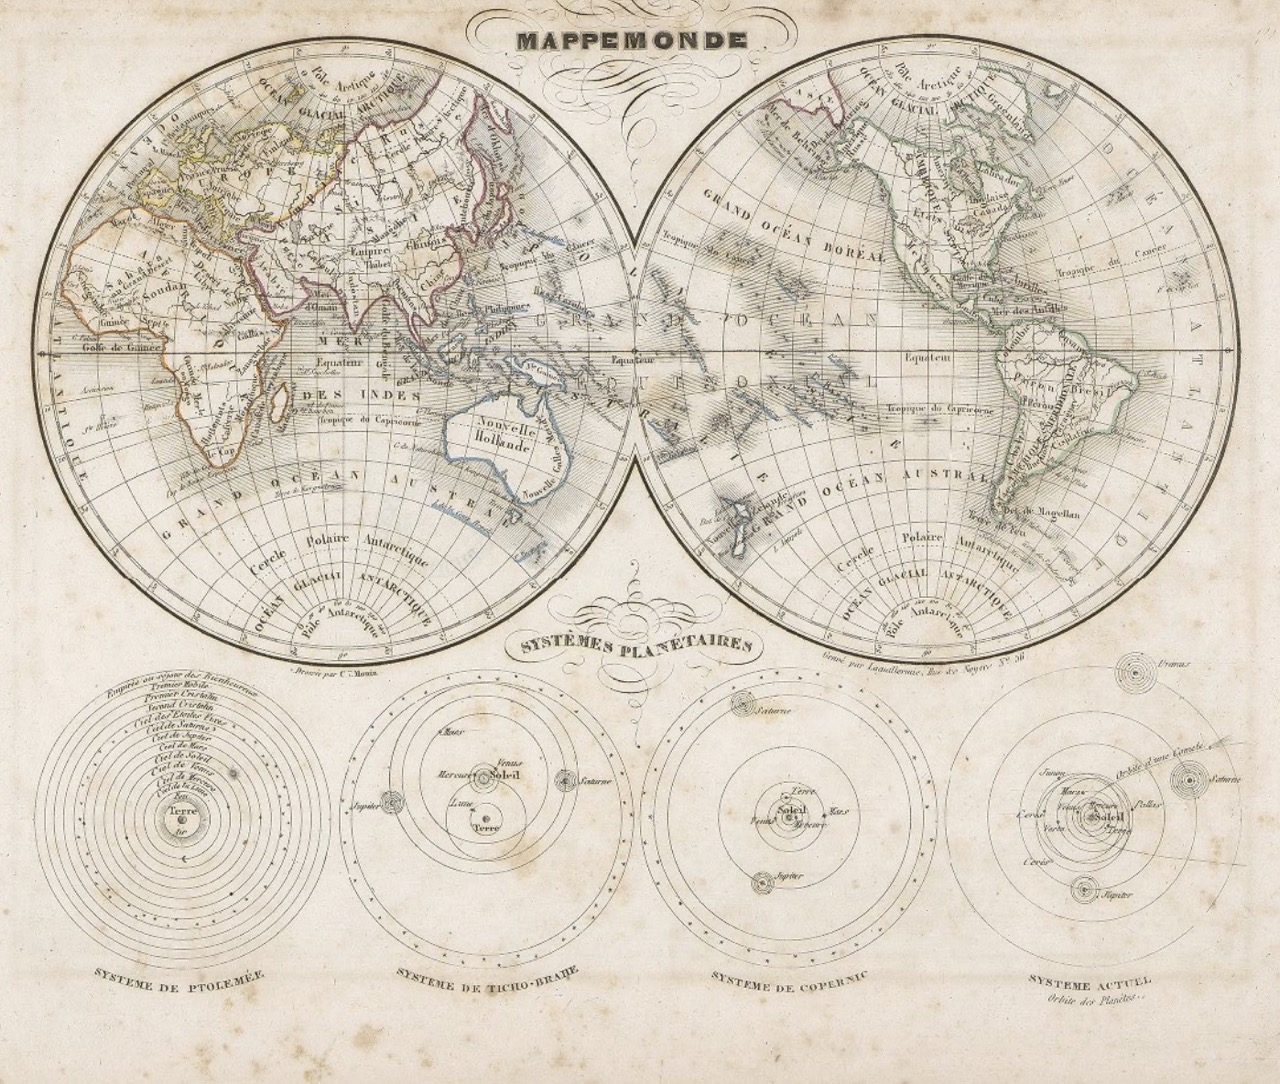 Monin: Atlas universel 1840, "Mappemonde"